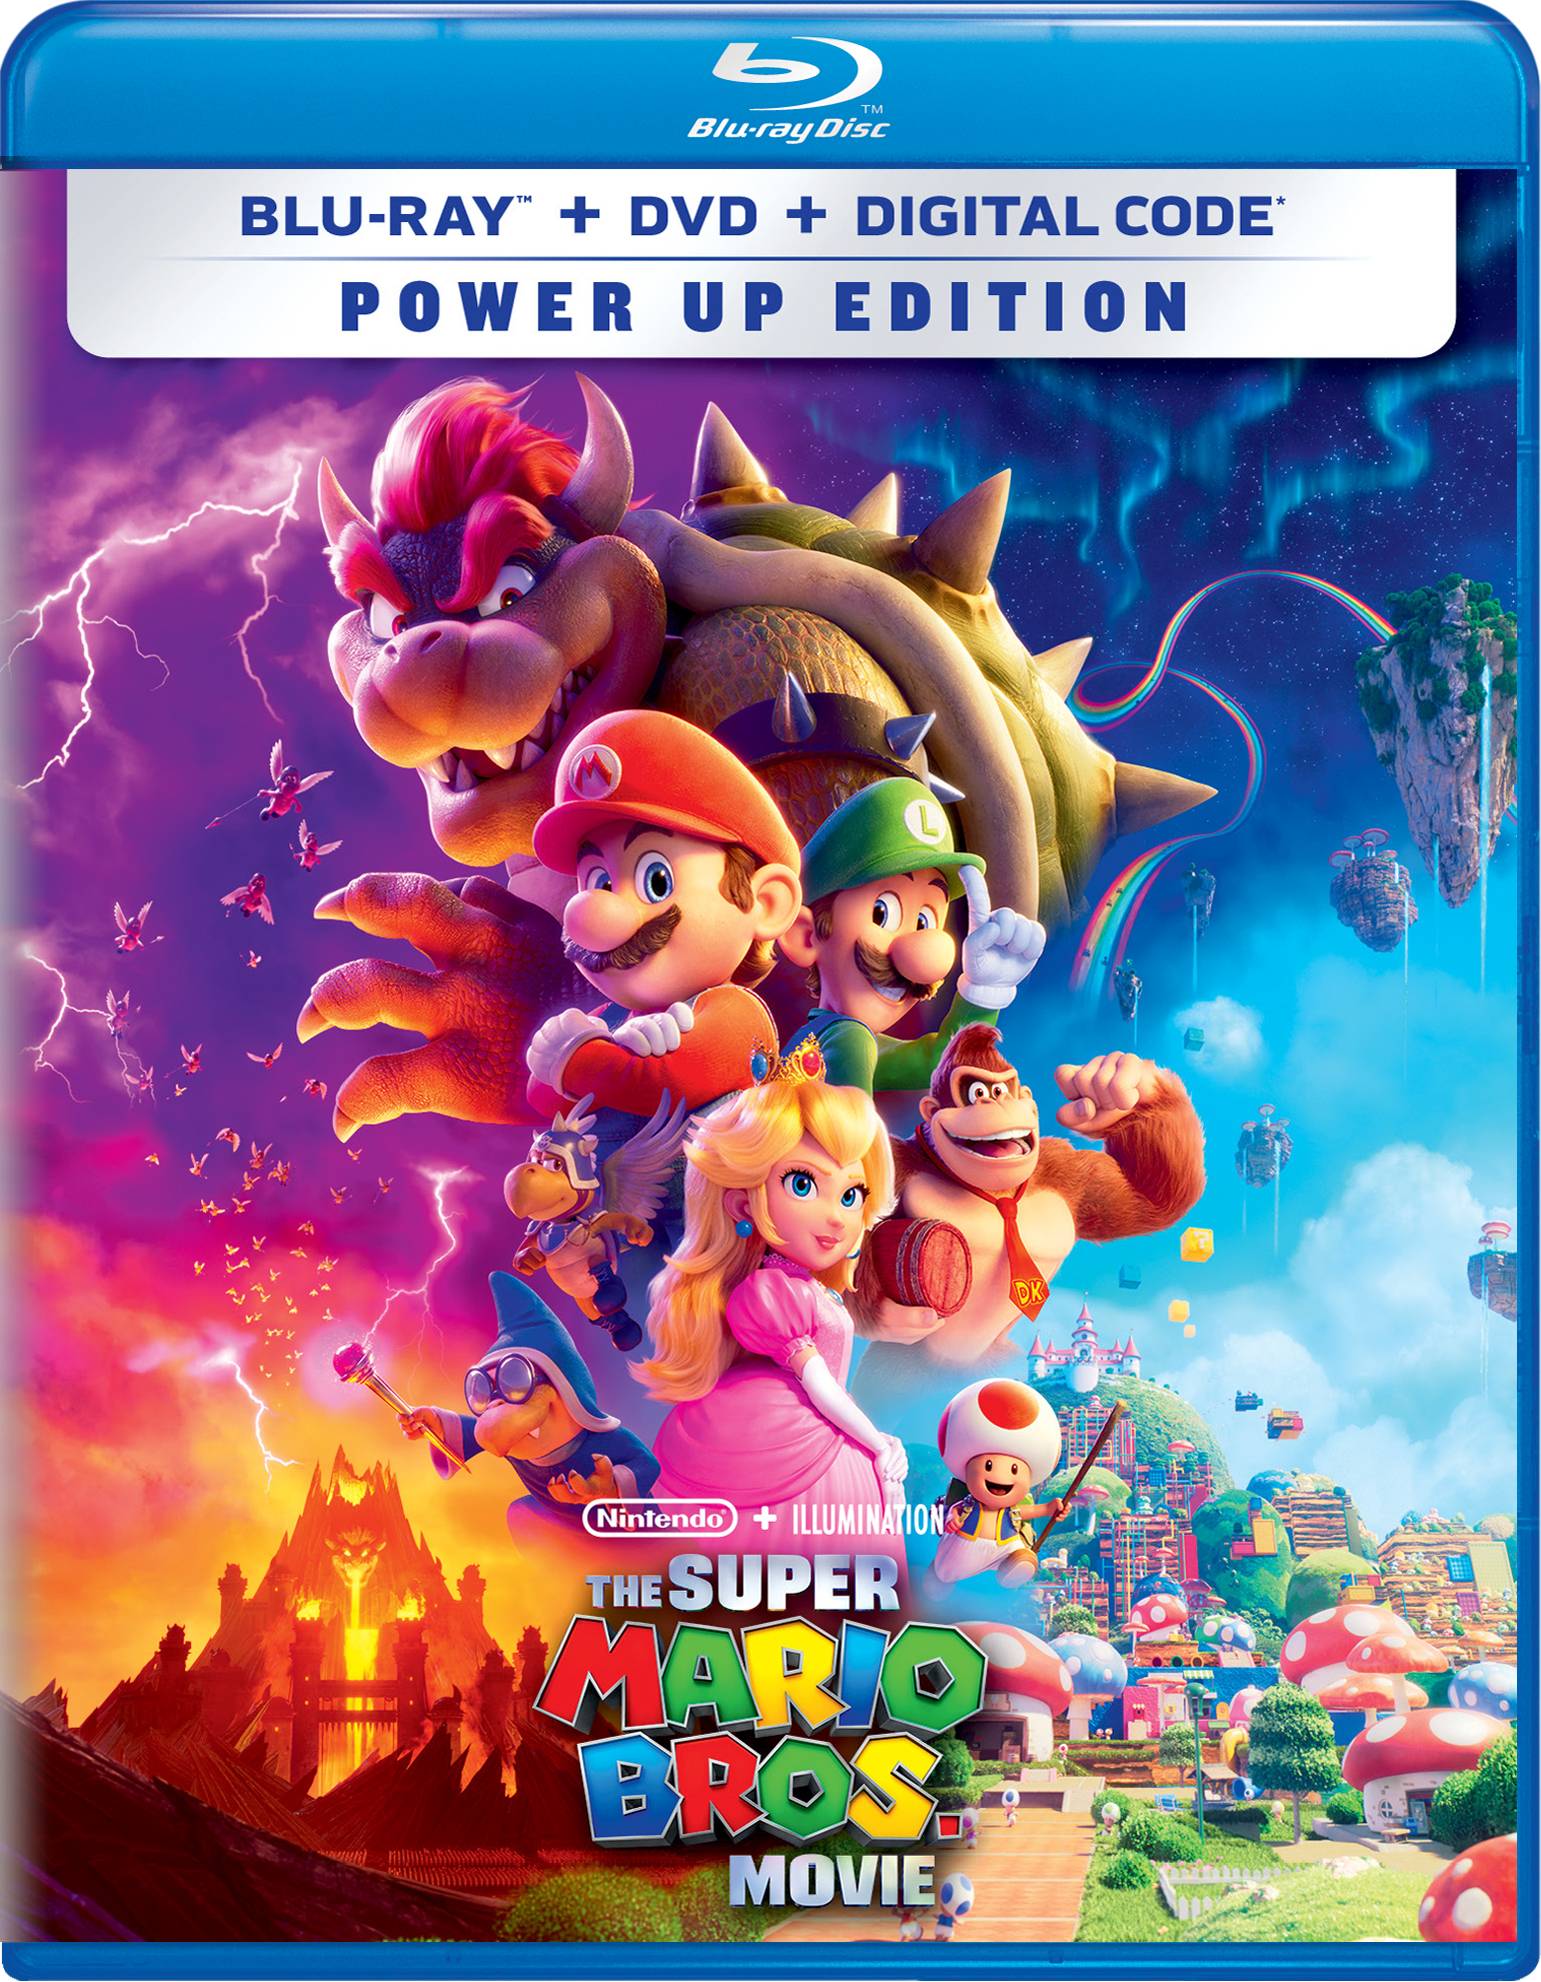 Super Mario Flash Download & Review